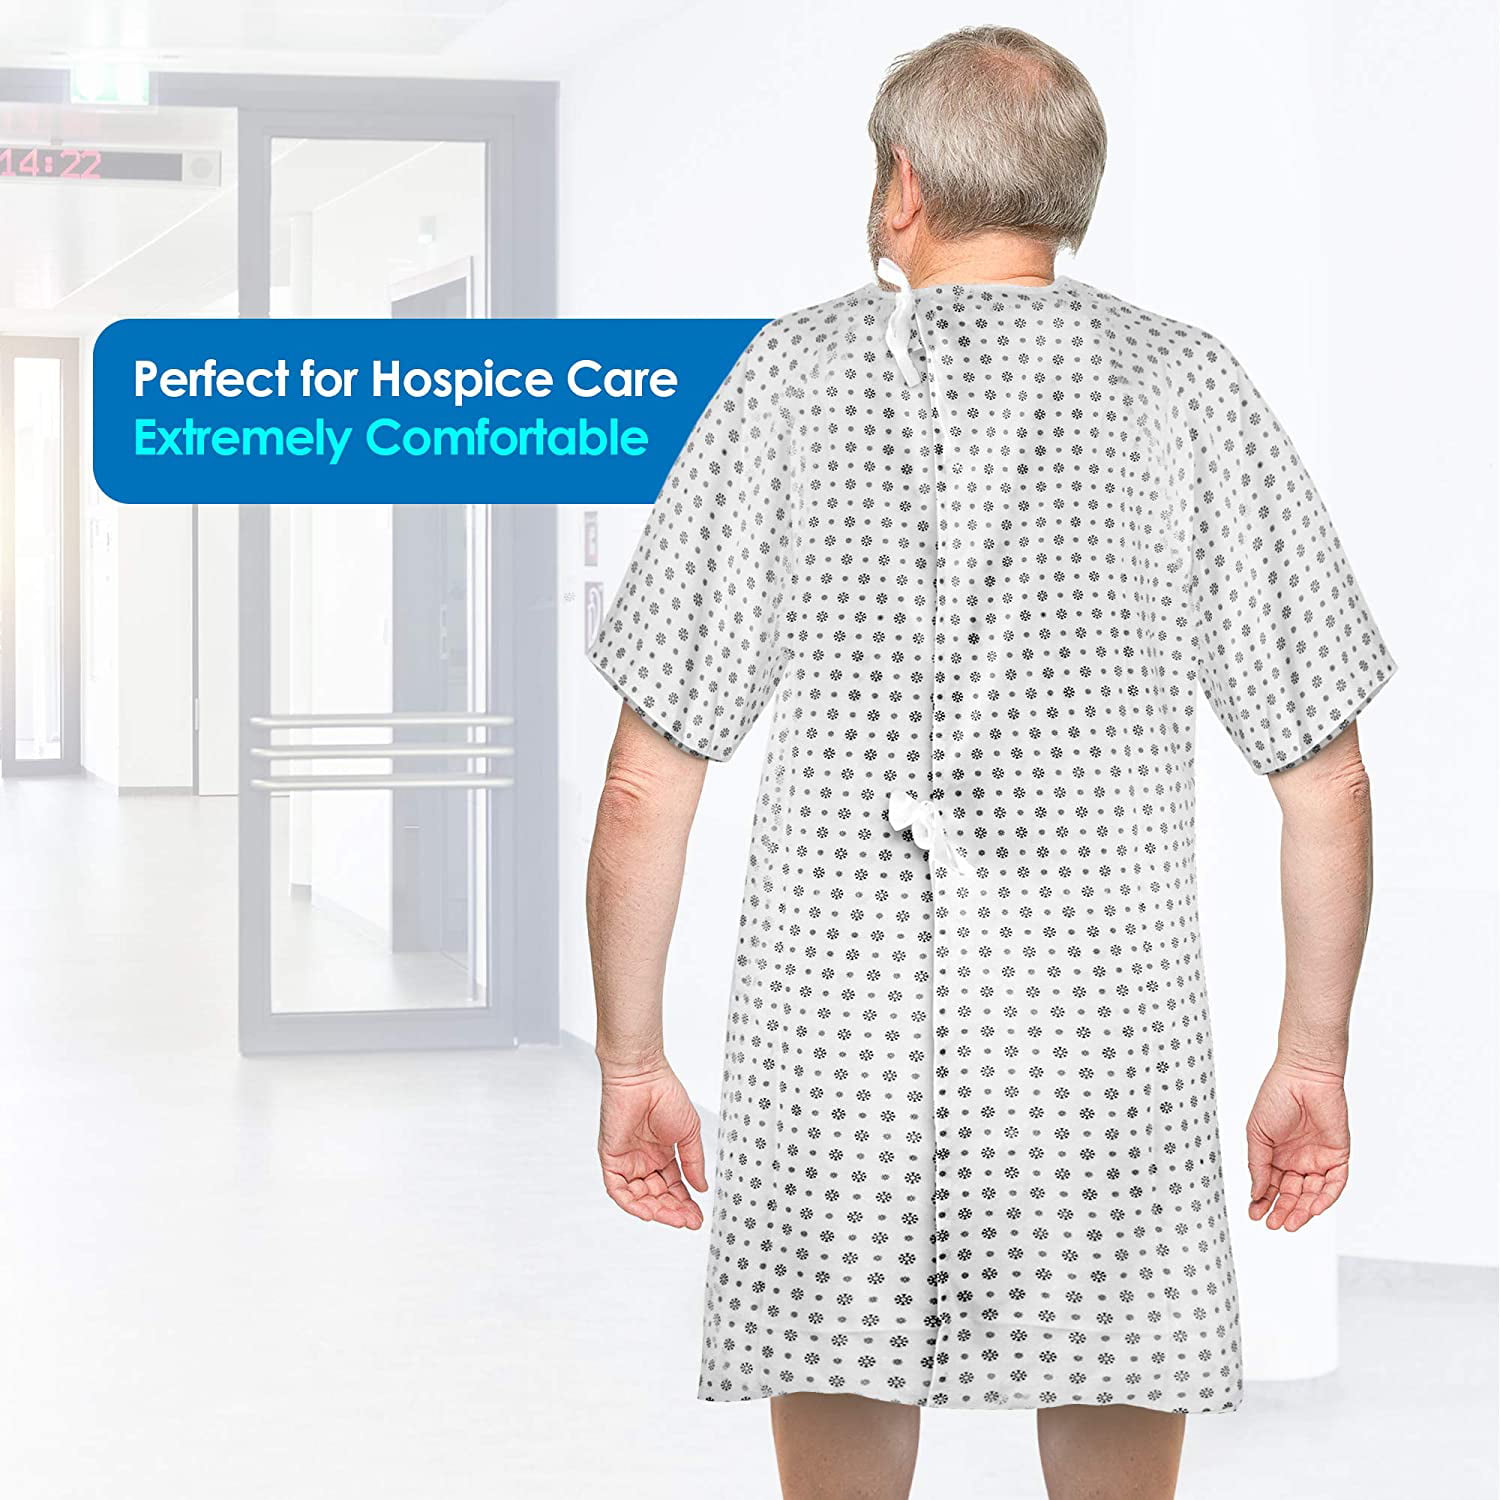 Magnus Care Patient Medical Hospital Gown, Cotton Blend, 46 Long & 66  Wide, 4 Pack